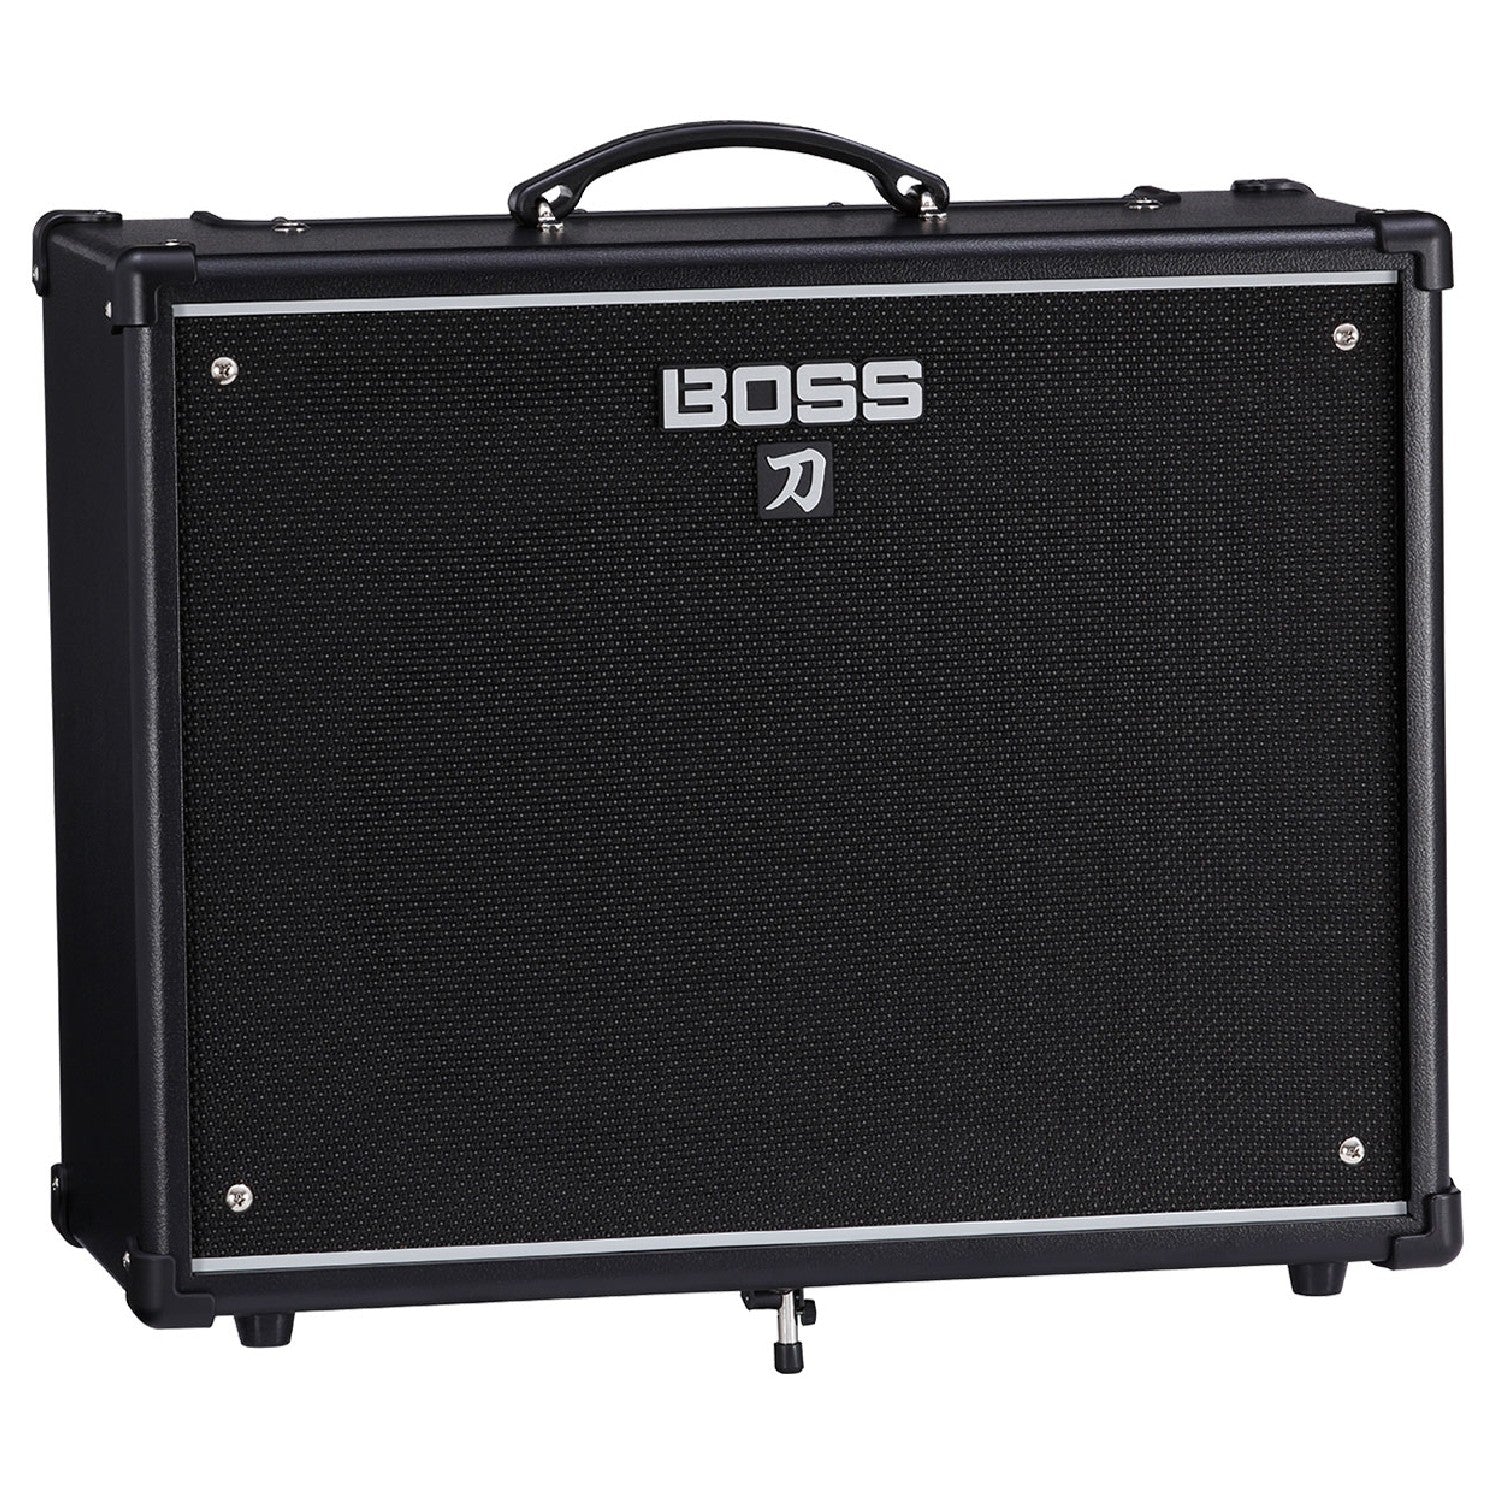 BOSS Katana 100 MK2 1x12 100W Guitar Amp - PC Sound Inc